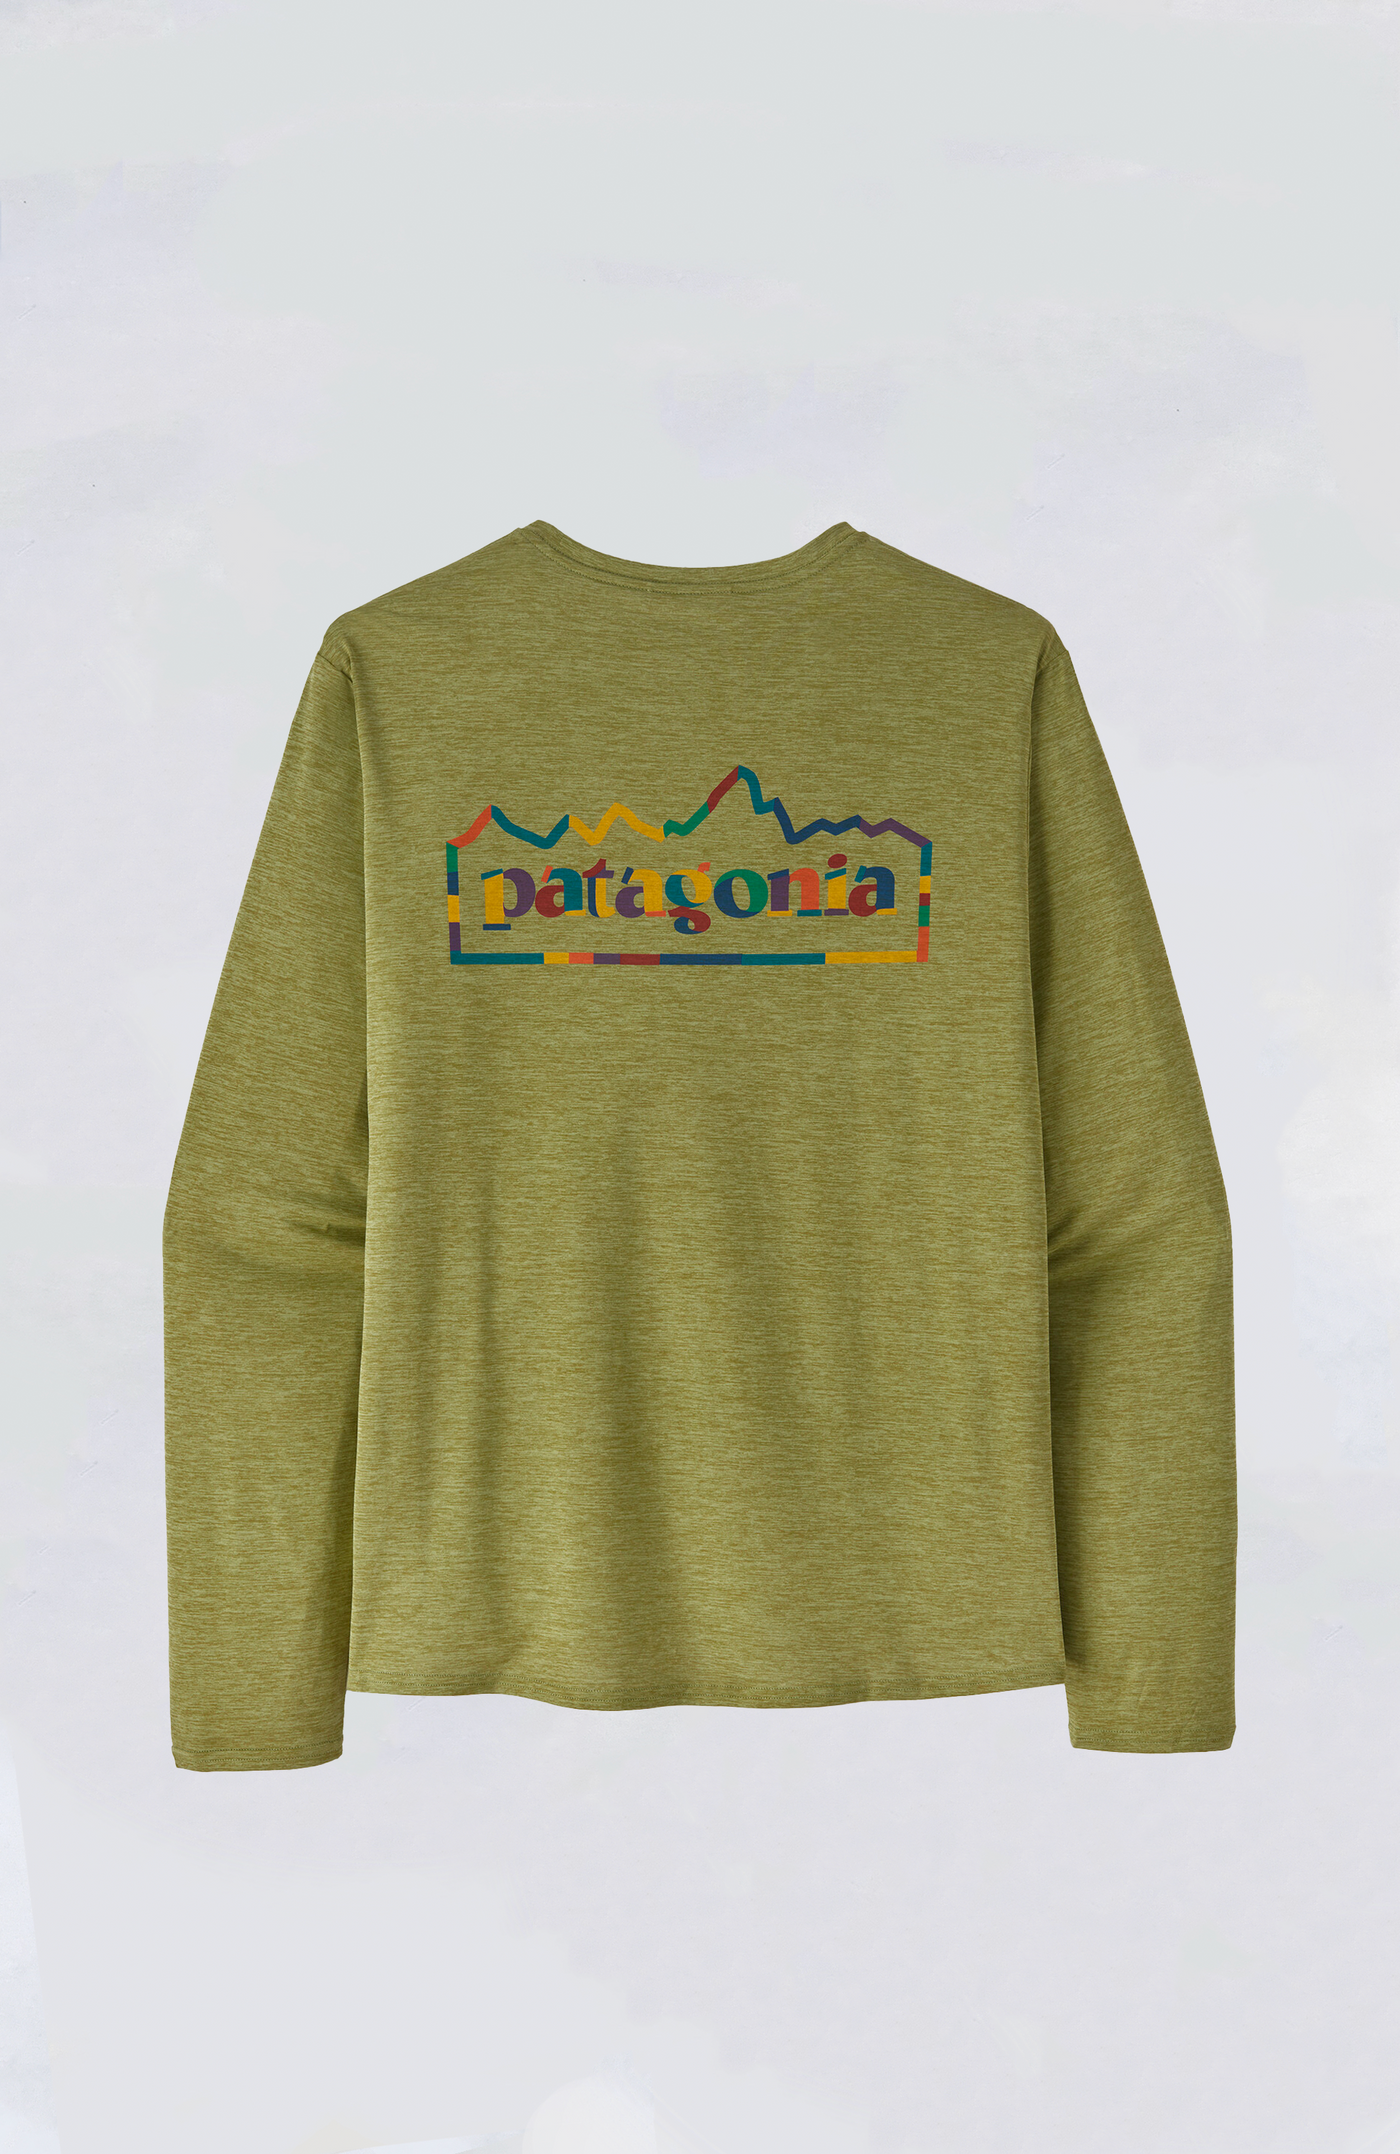 Patagonia Long Sleeve Shirt - M's L/S Cap Cool Daily Graphic Shirt